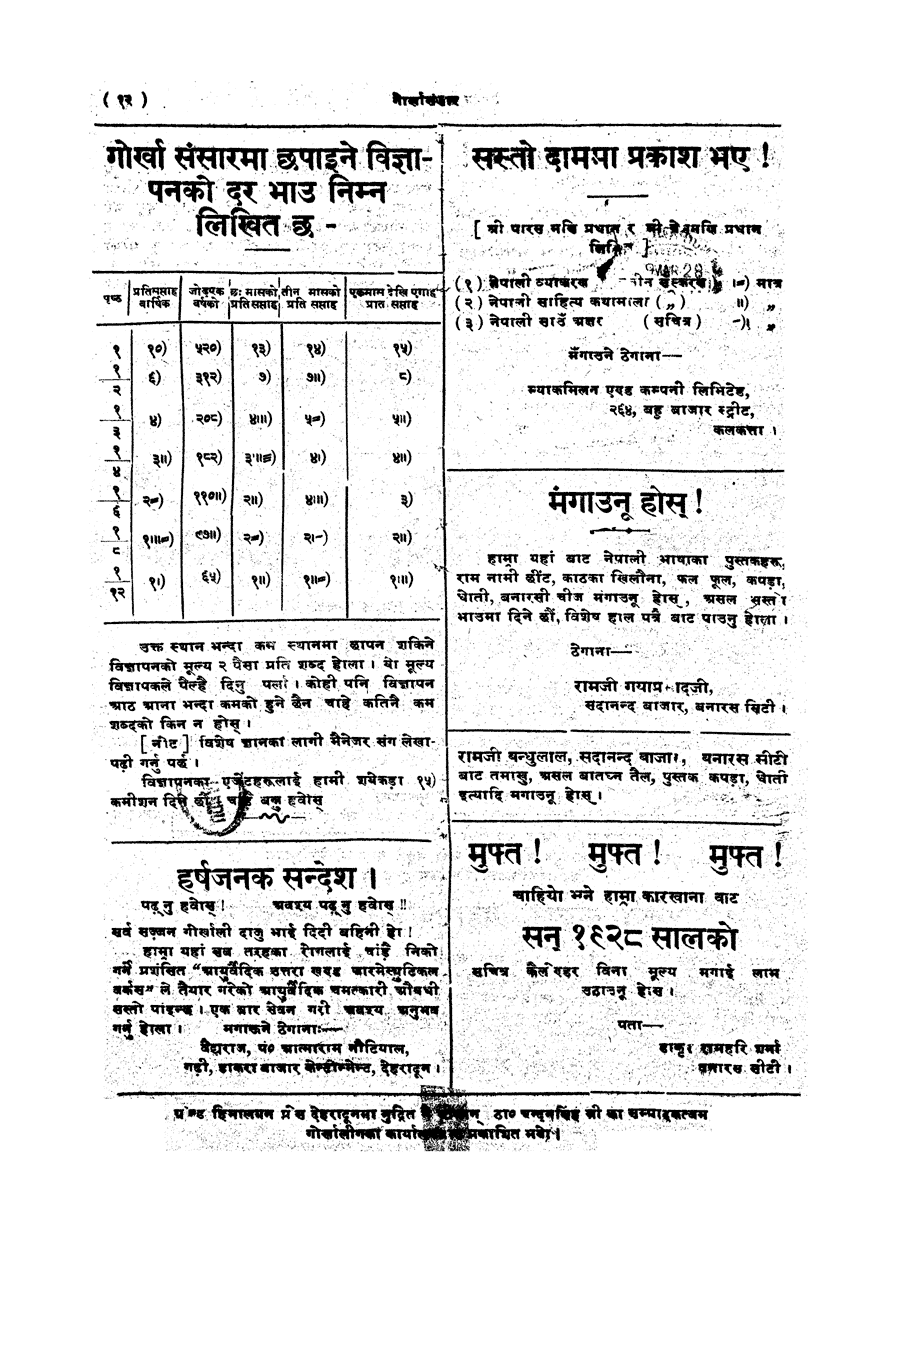 Gorkha Sansar, 6 Mar 1928, page 12